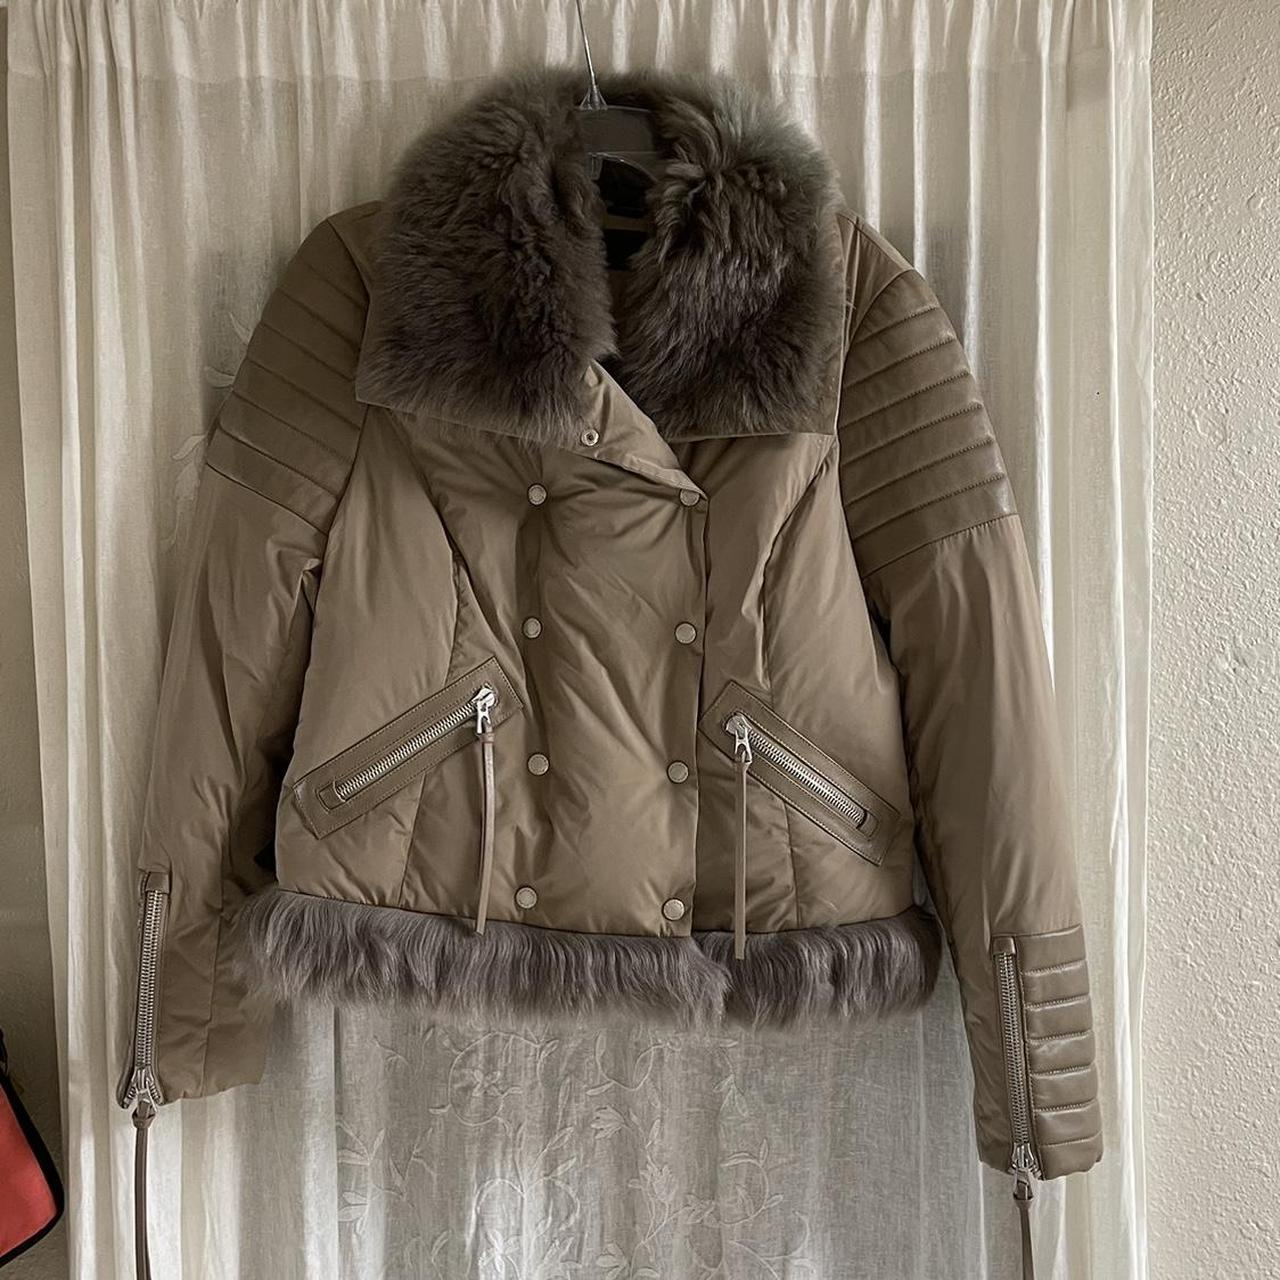 Rudsak puffer jacket - Size large, fits true to... - Depop